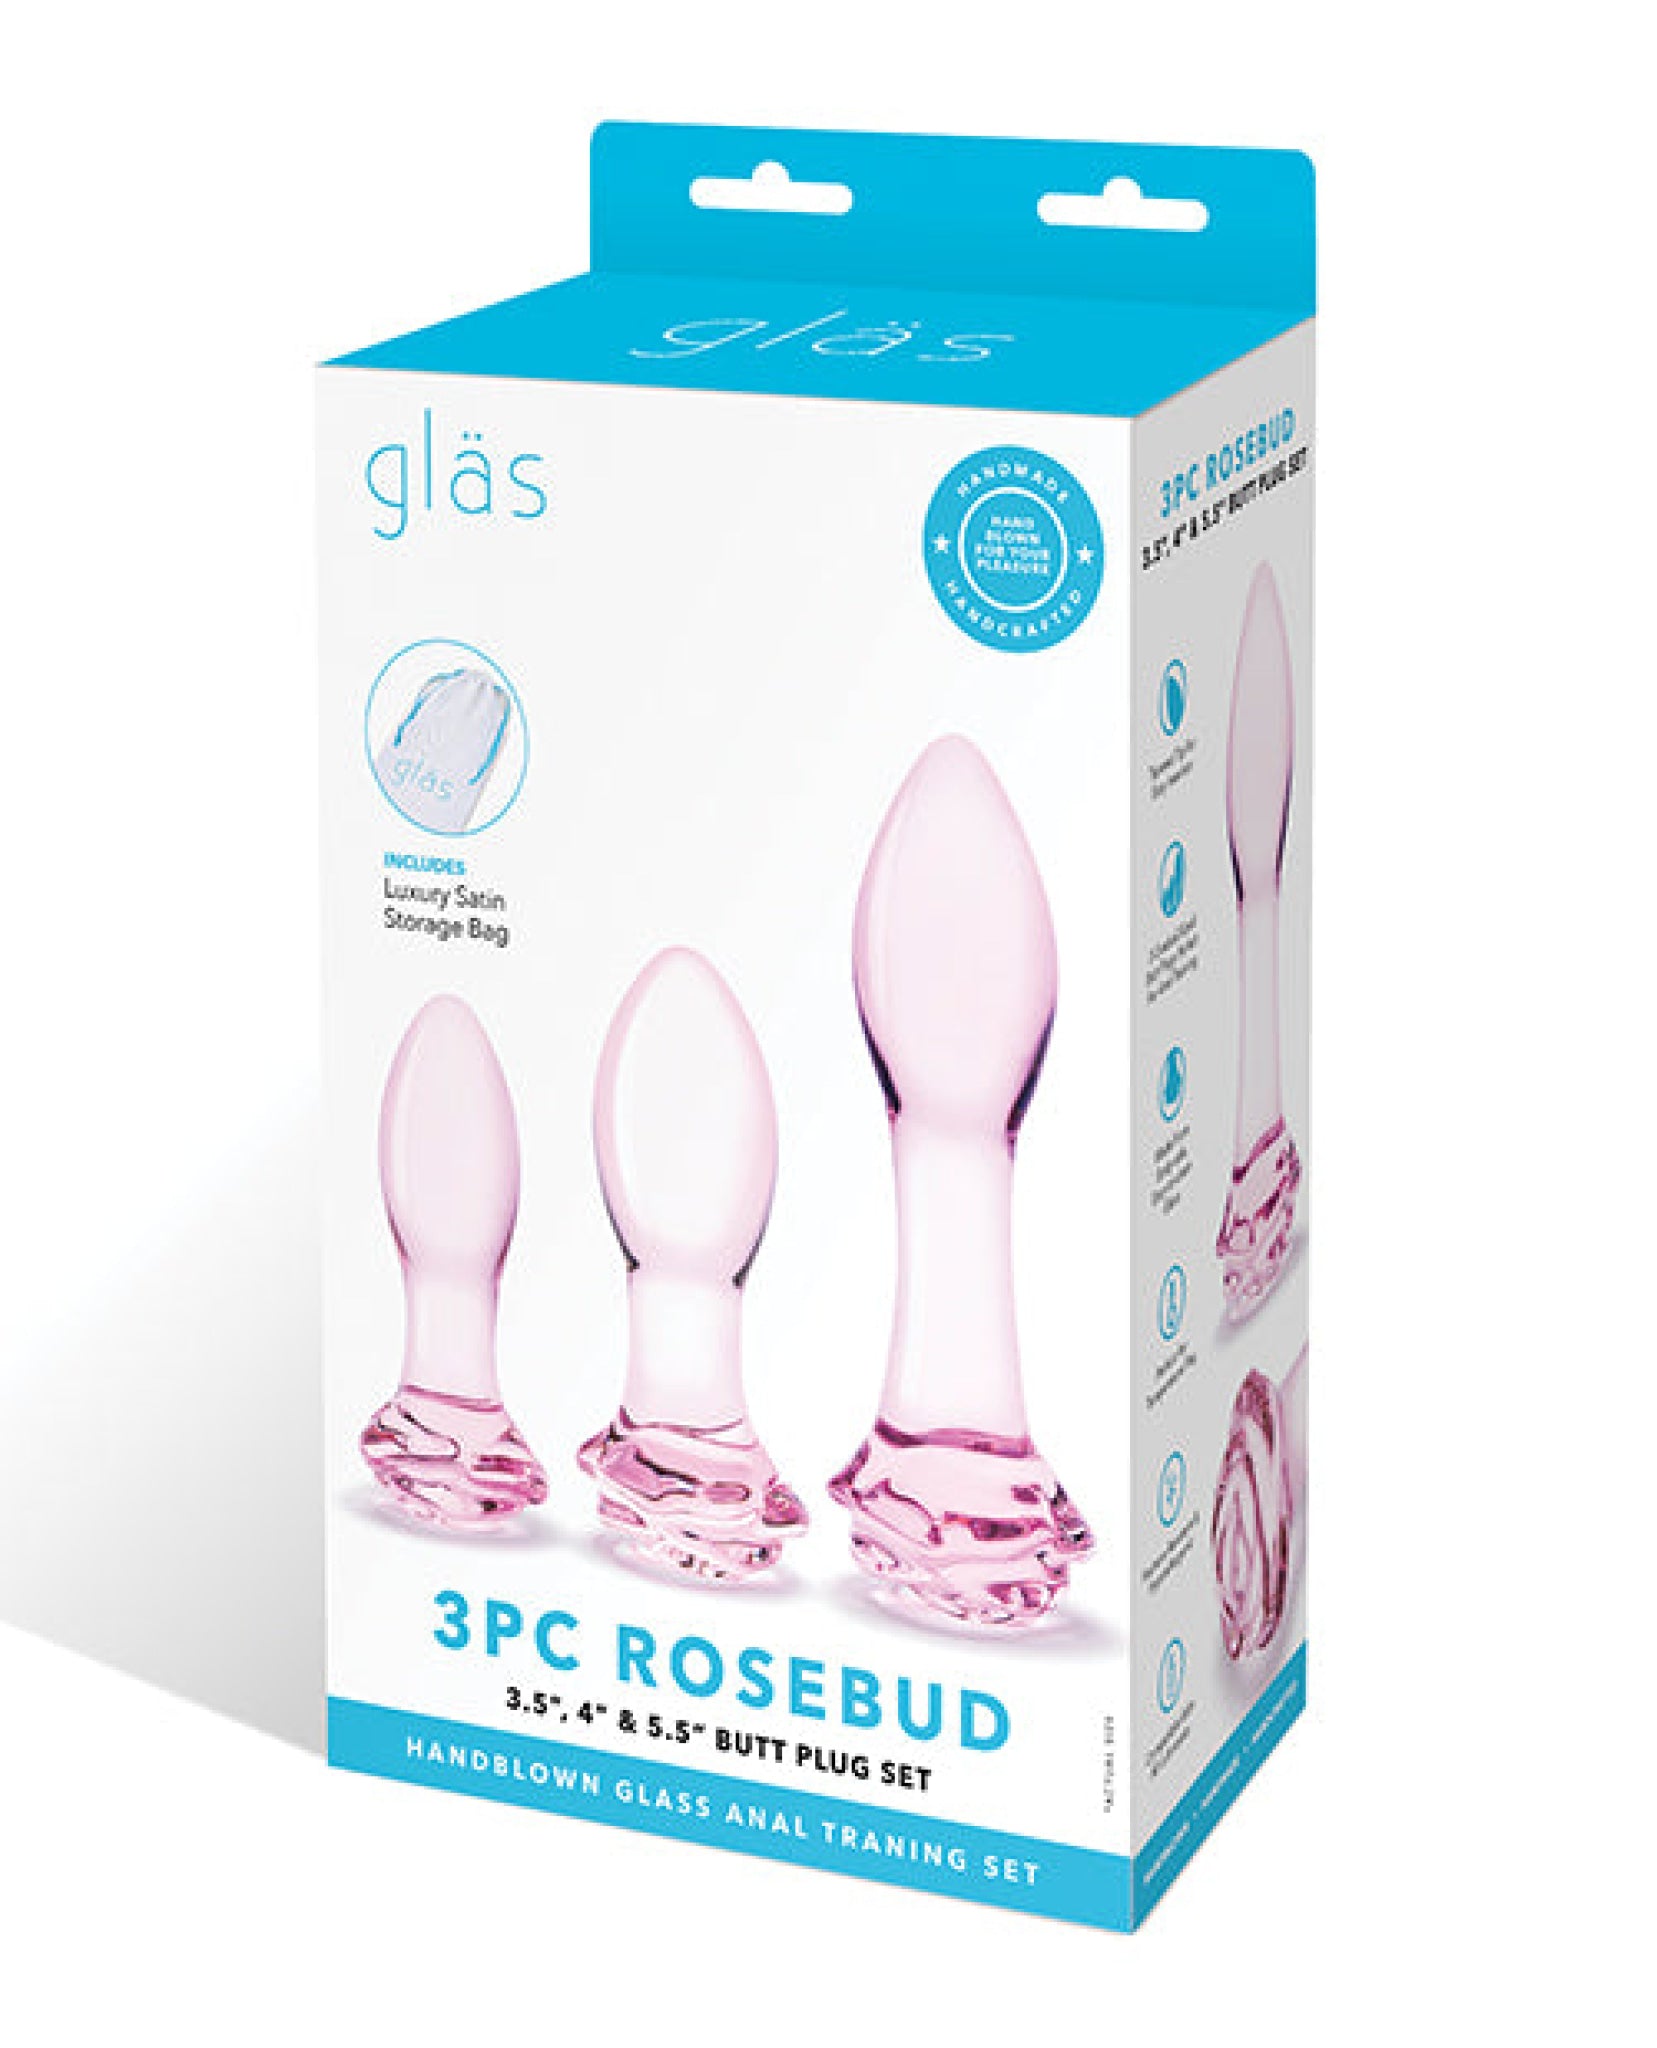 Glas 3 Pc Rosebud Butt Plug Set - Pink Gläs